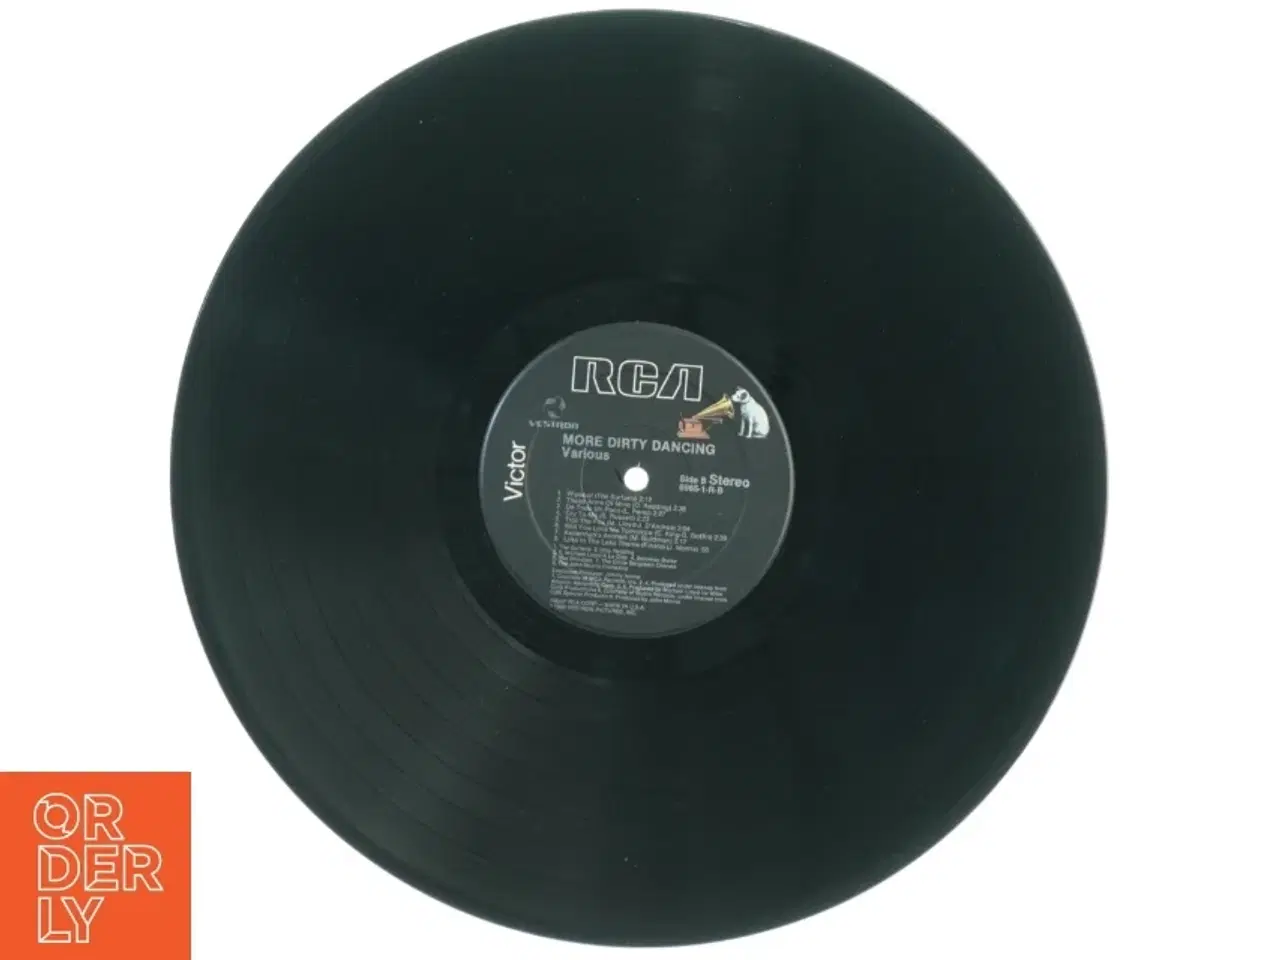 Billede 4 - More Dirty Dancing vinylplade fra RCA Records (str. 31 x 31 cm)